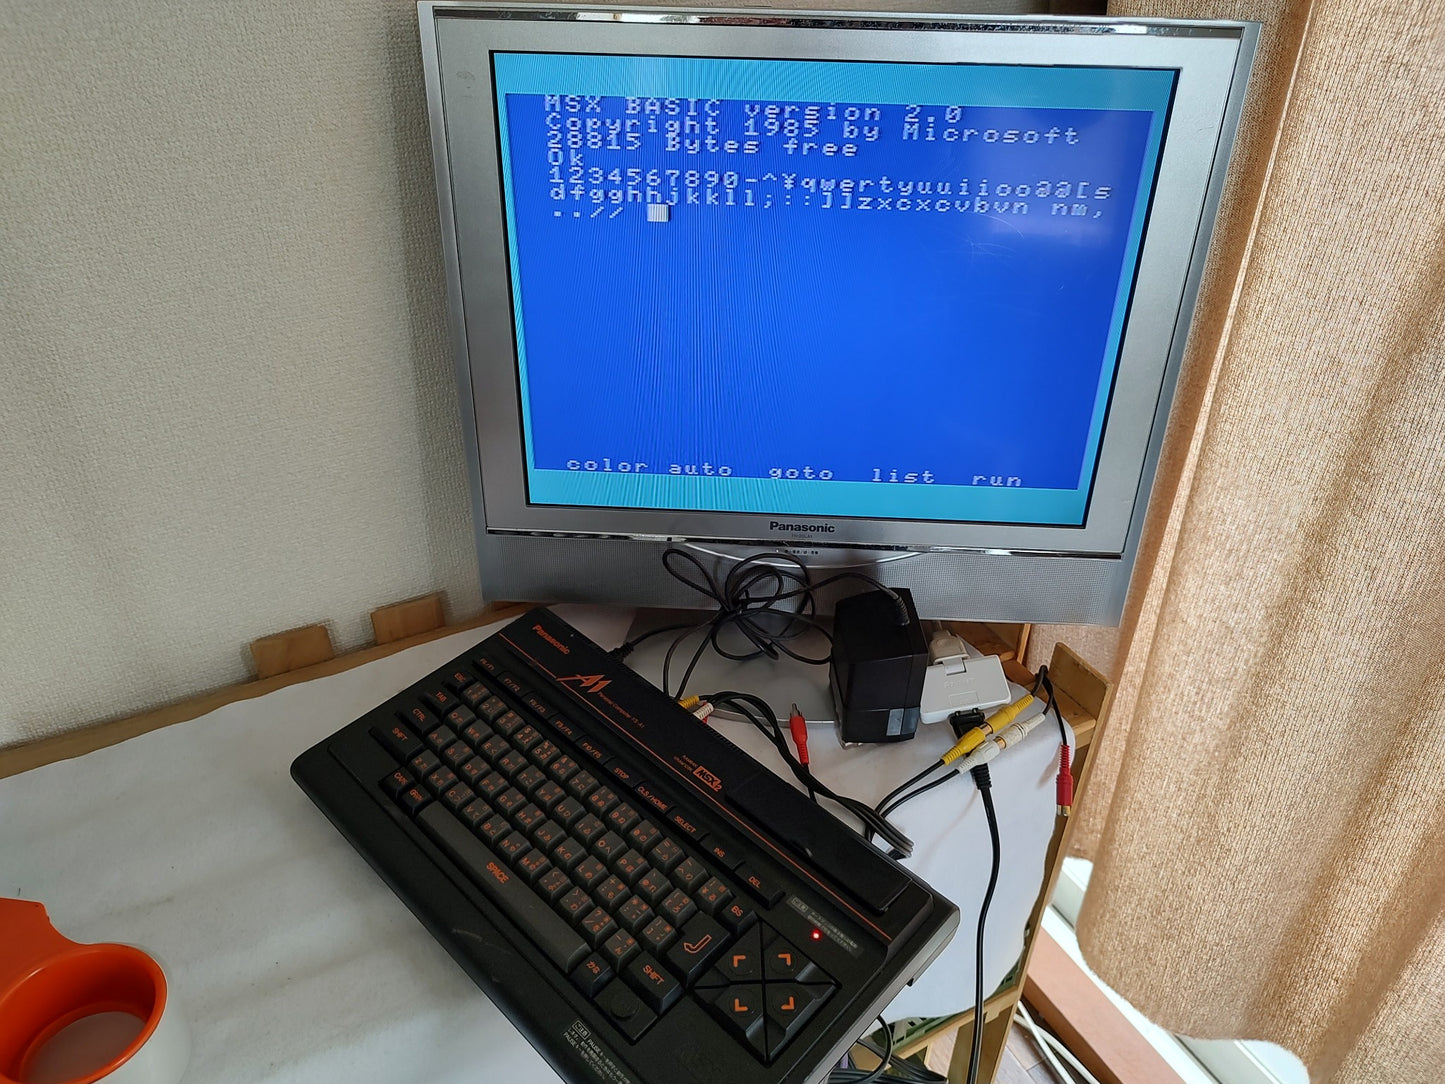 Panasonic MSX2 FS-A1 MK2 Personal Computer and PSU set, Working-g0328-